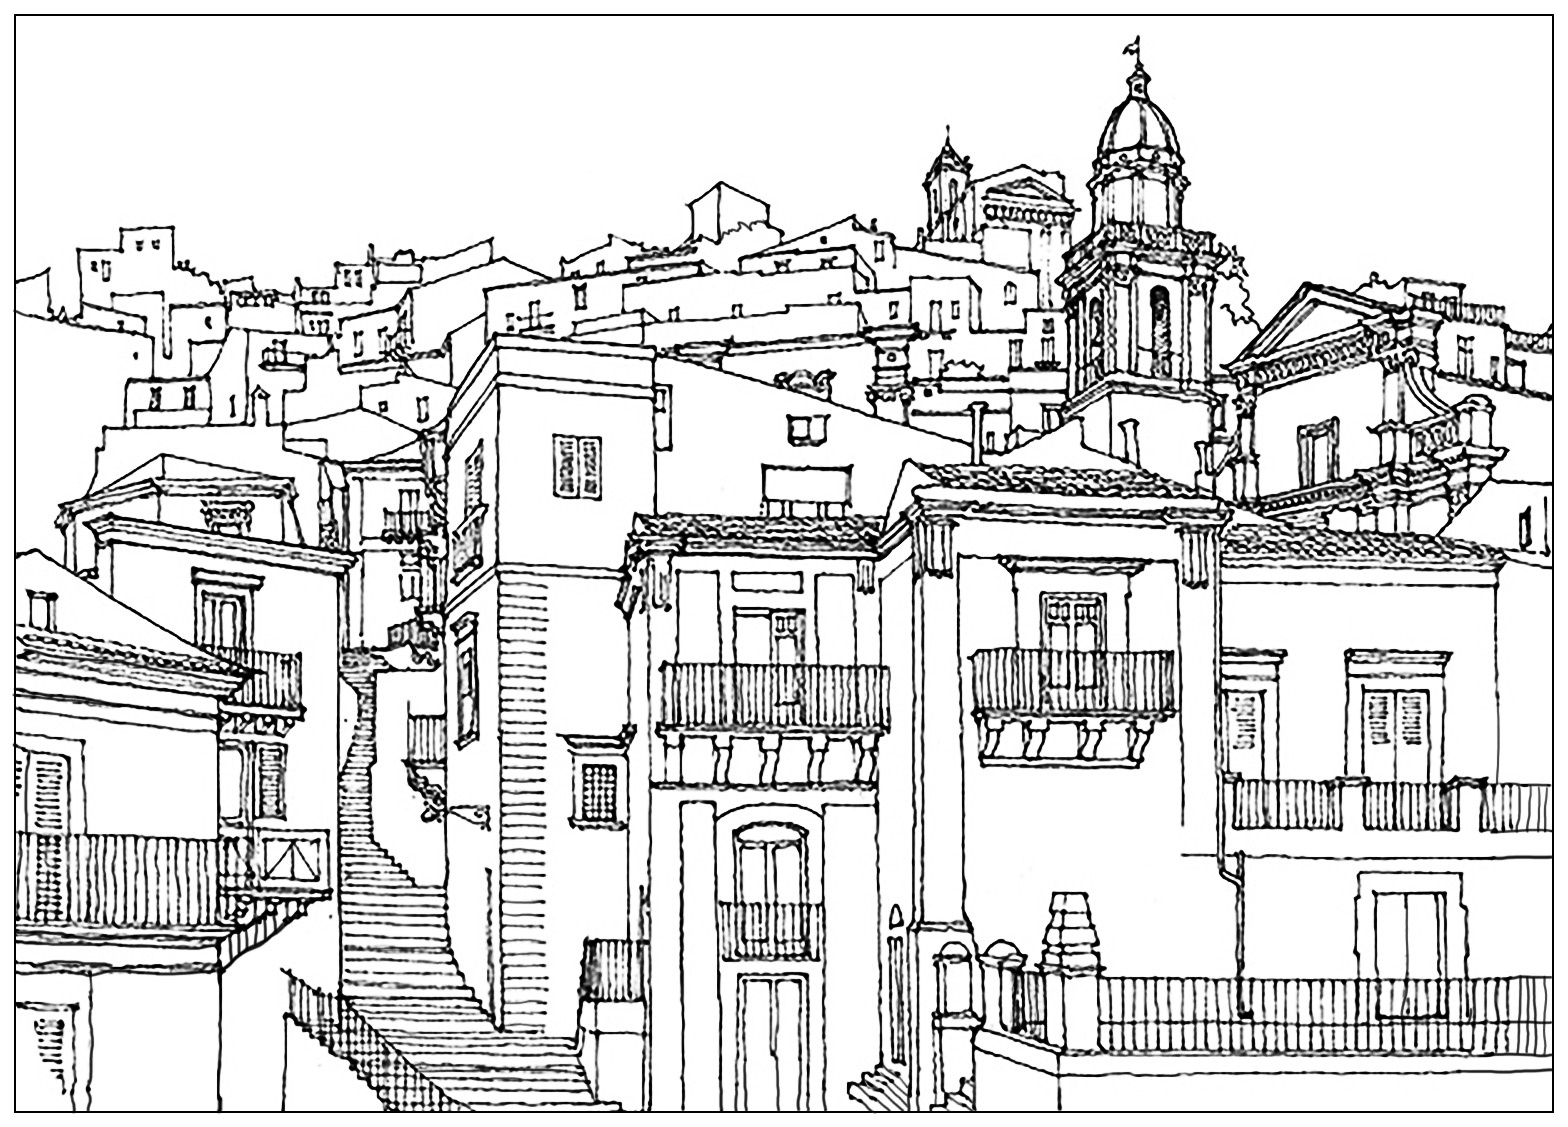 image=architecture habitation coloriage adulte village sicile italie 1